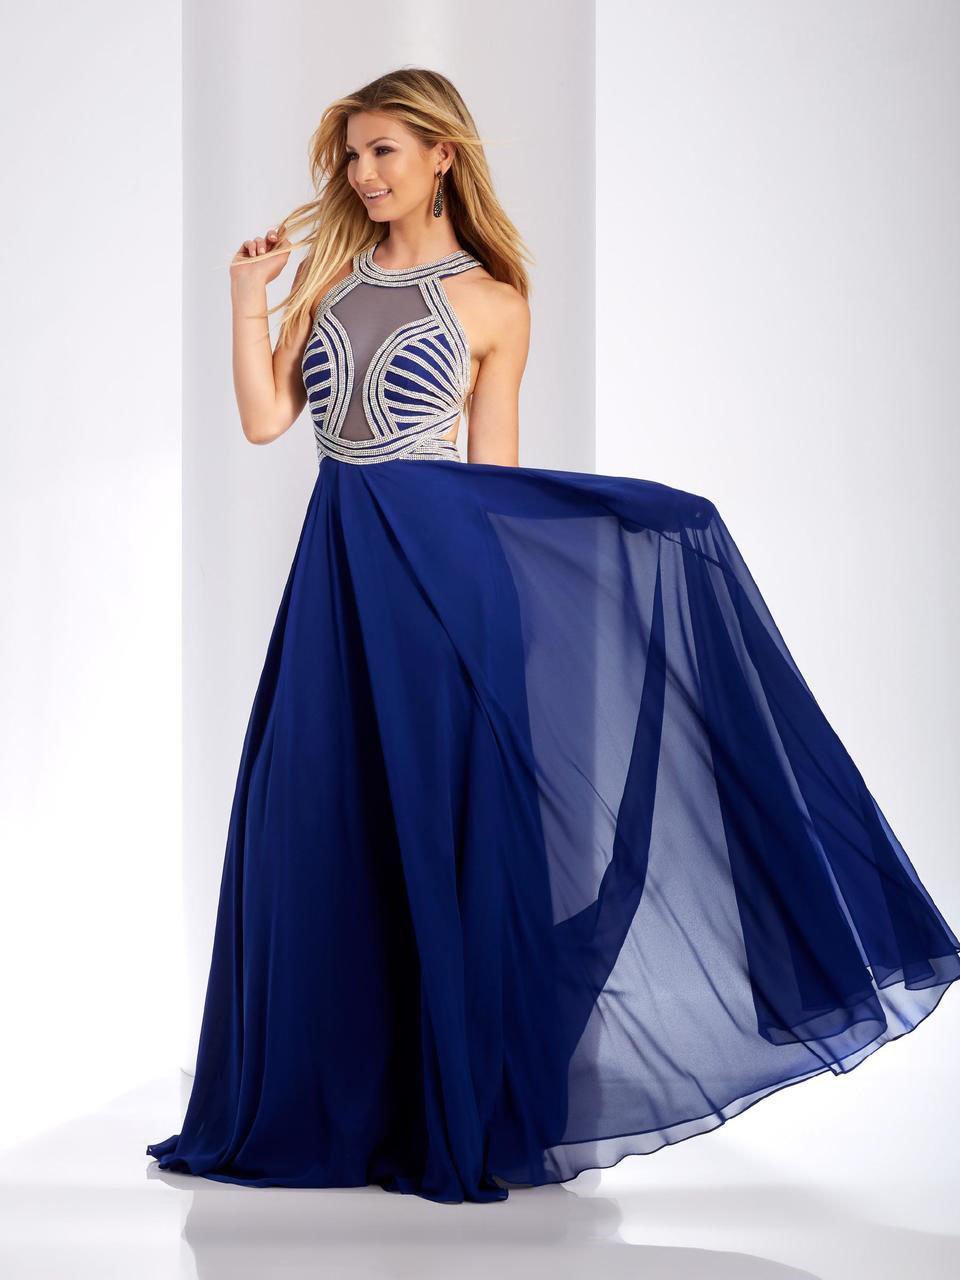 Clarisse - 3412 Illusion Halter A-line Dress in Blue